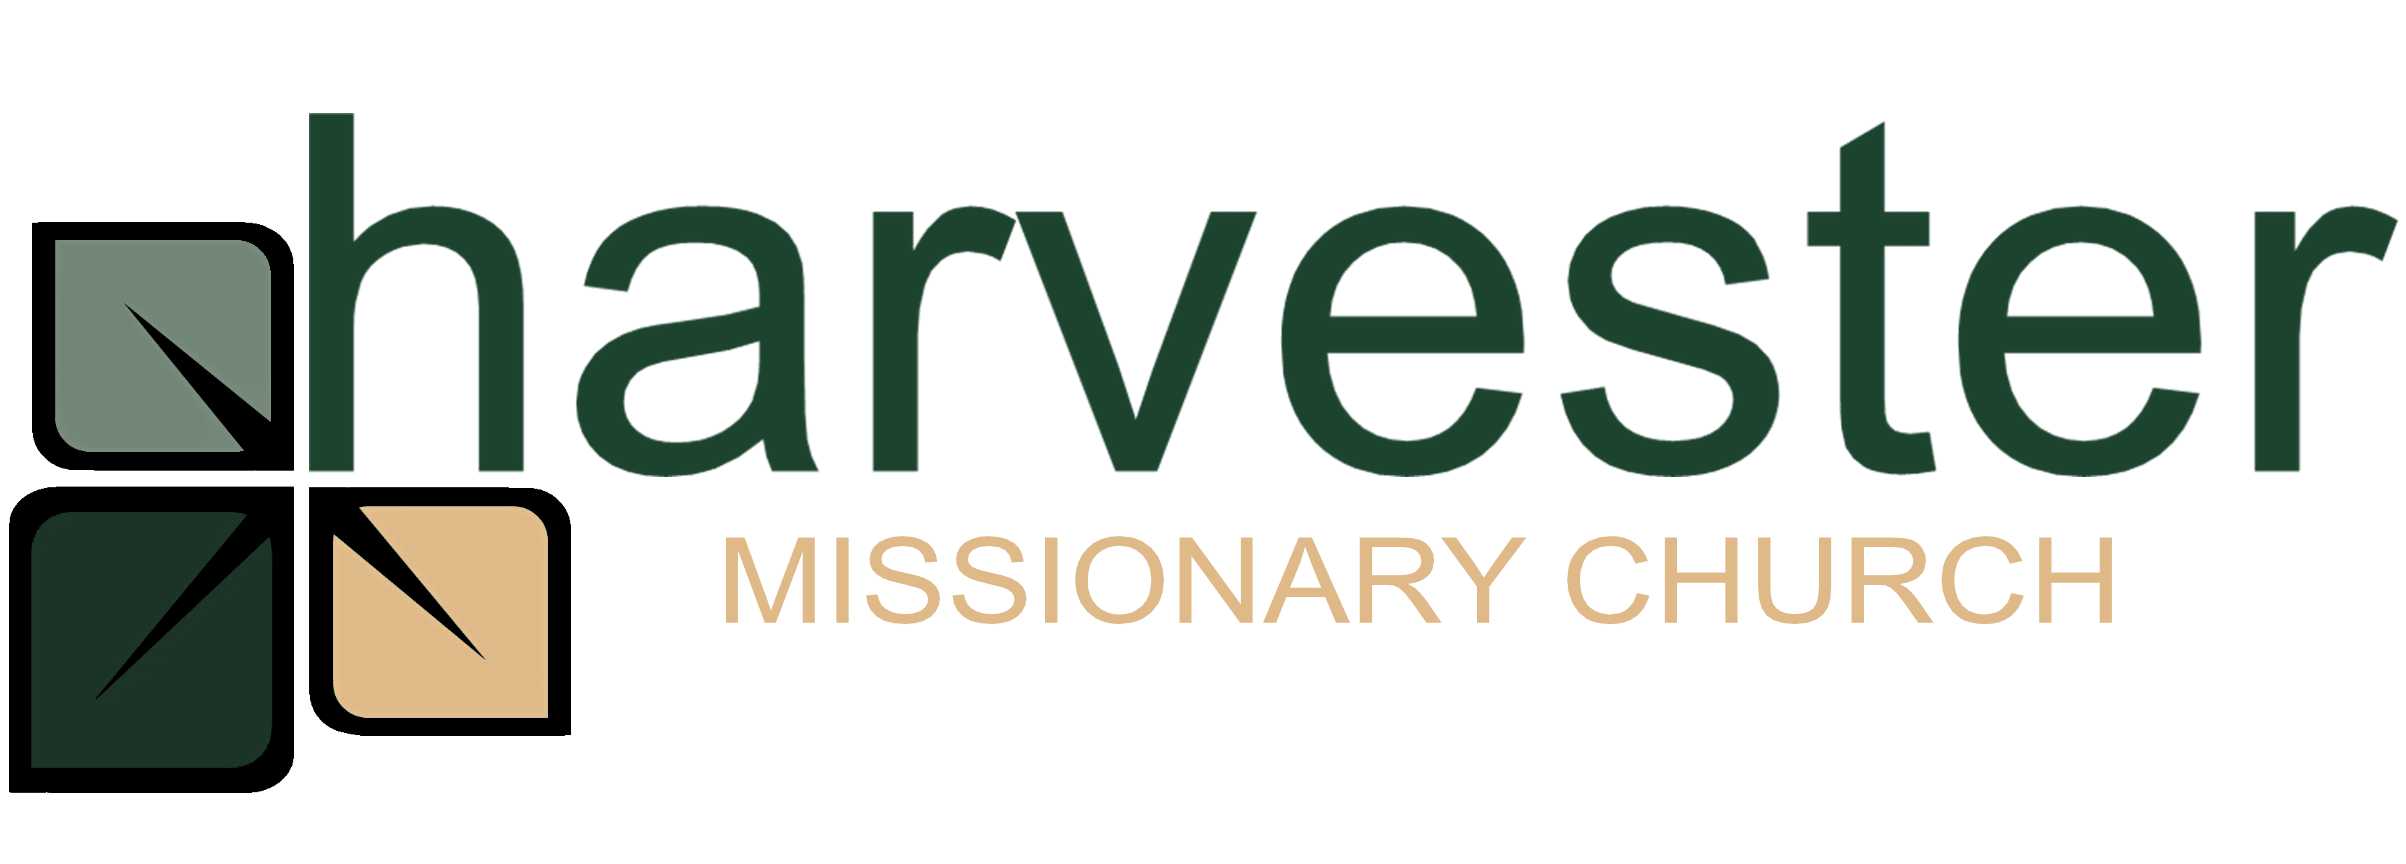 Harvester Missionary Church